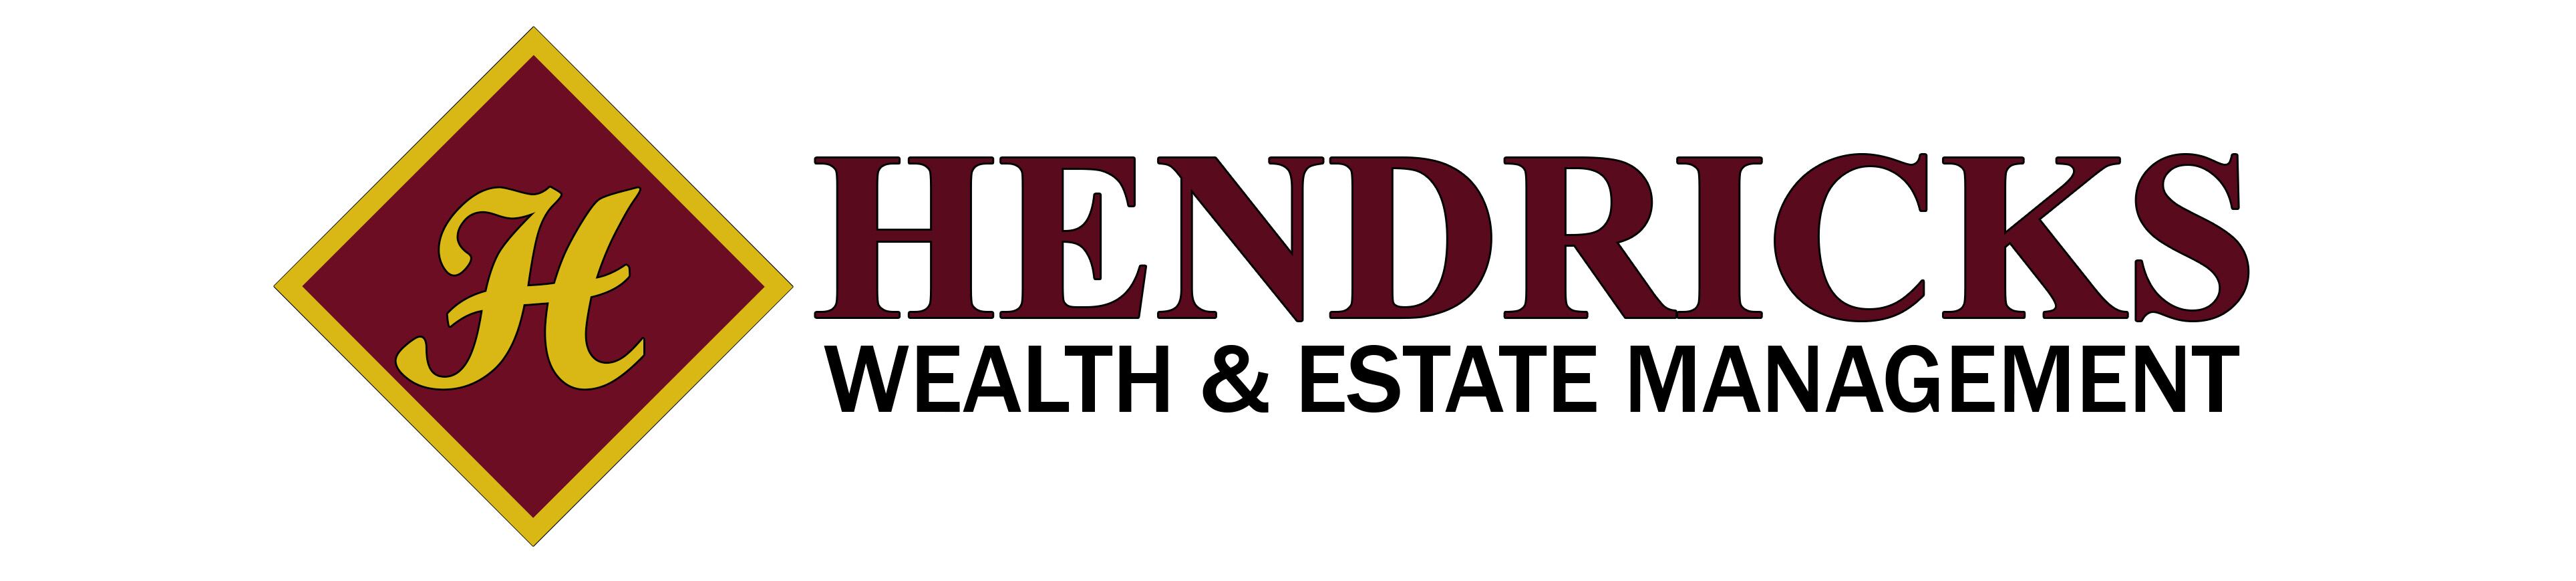 Hendricks Wealth & Estate Management Logo